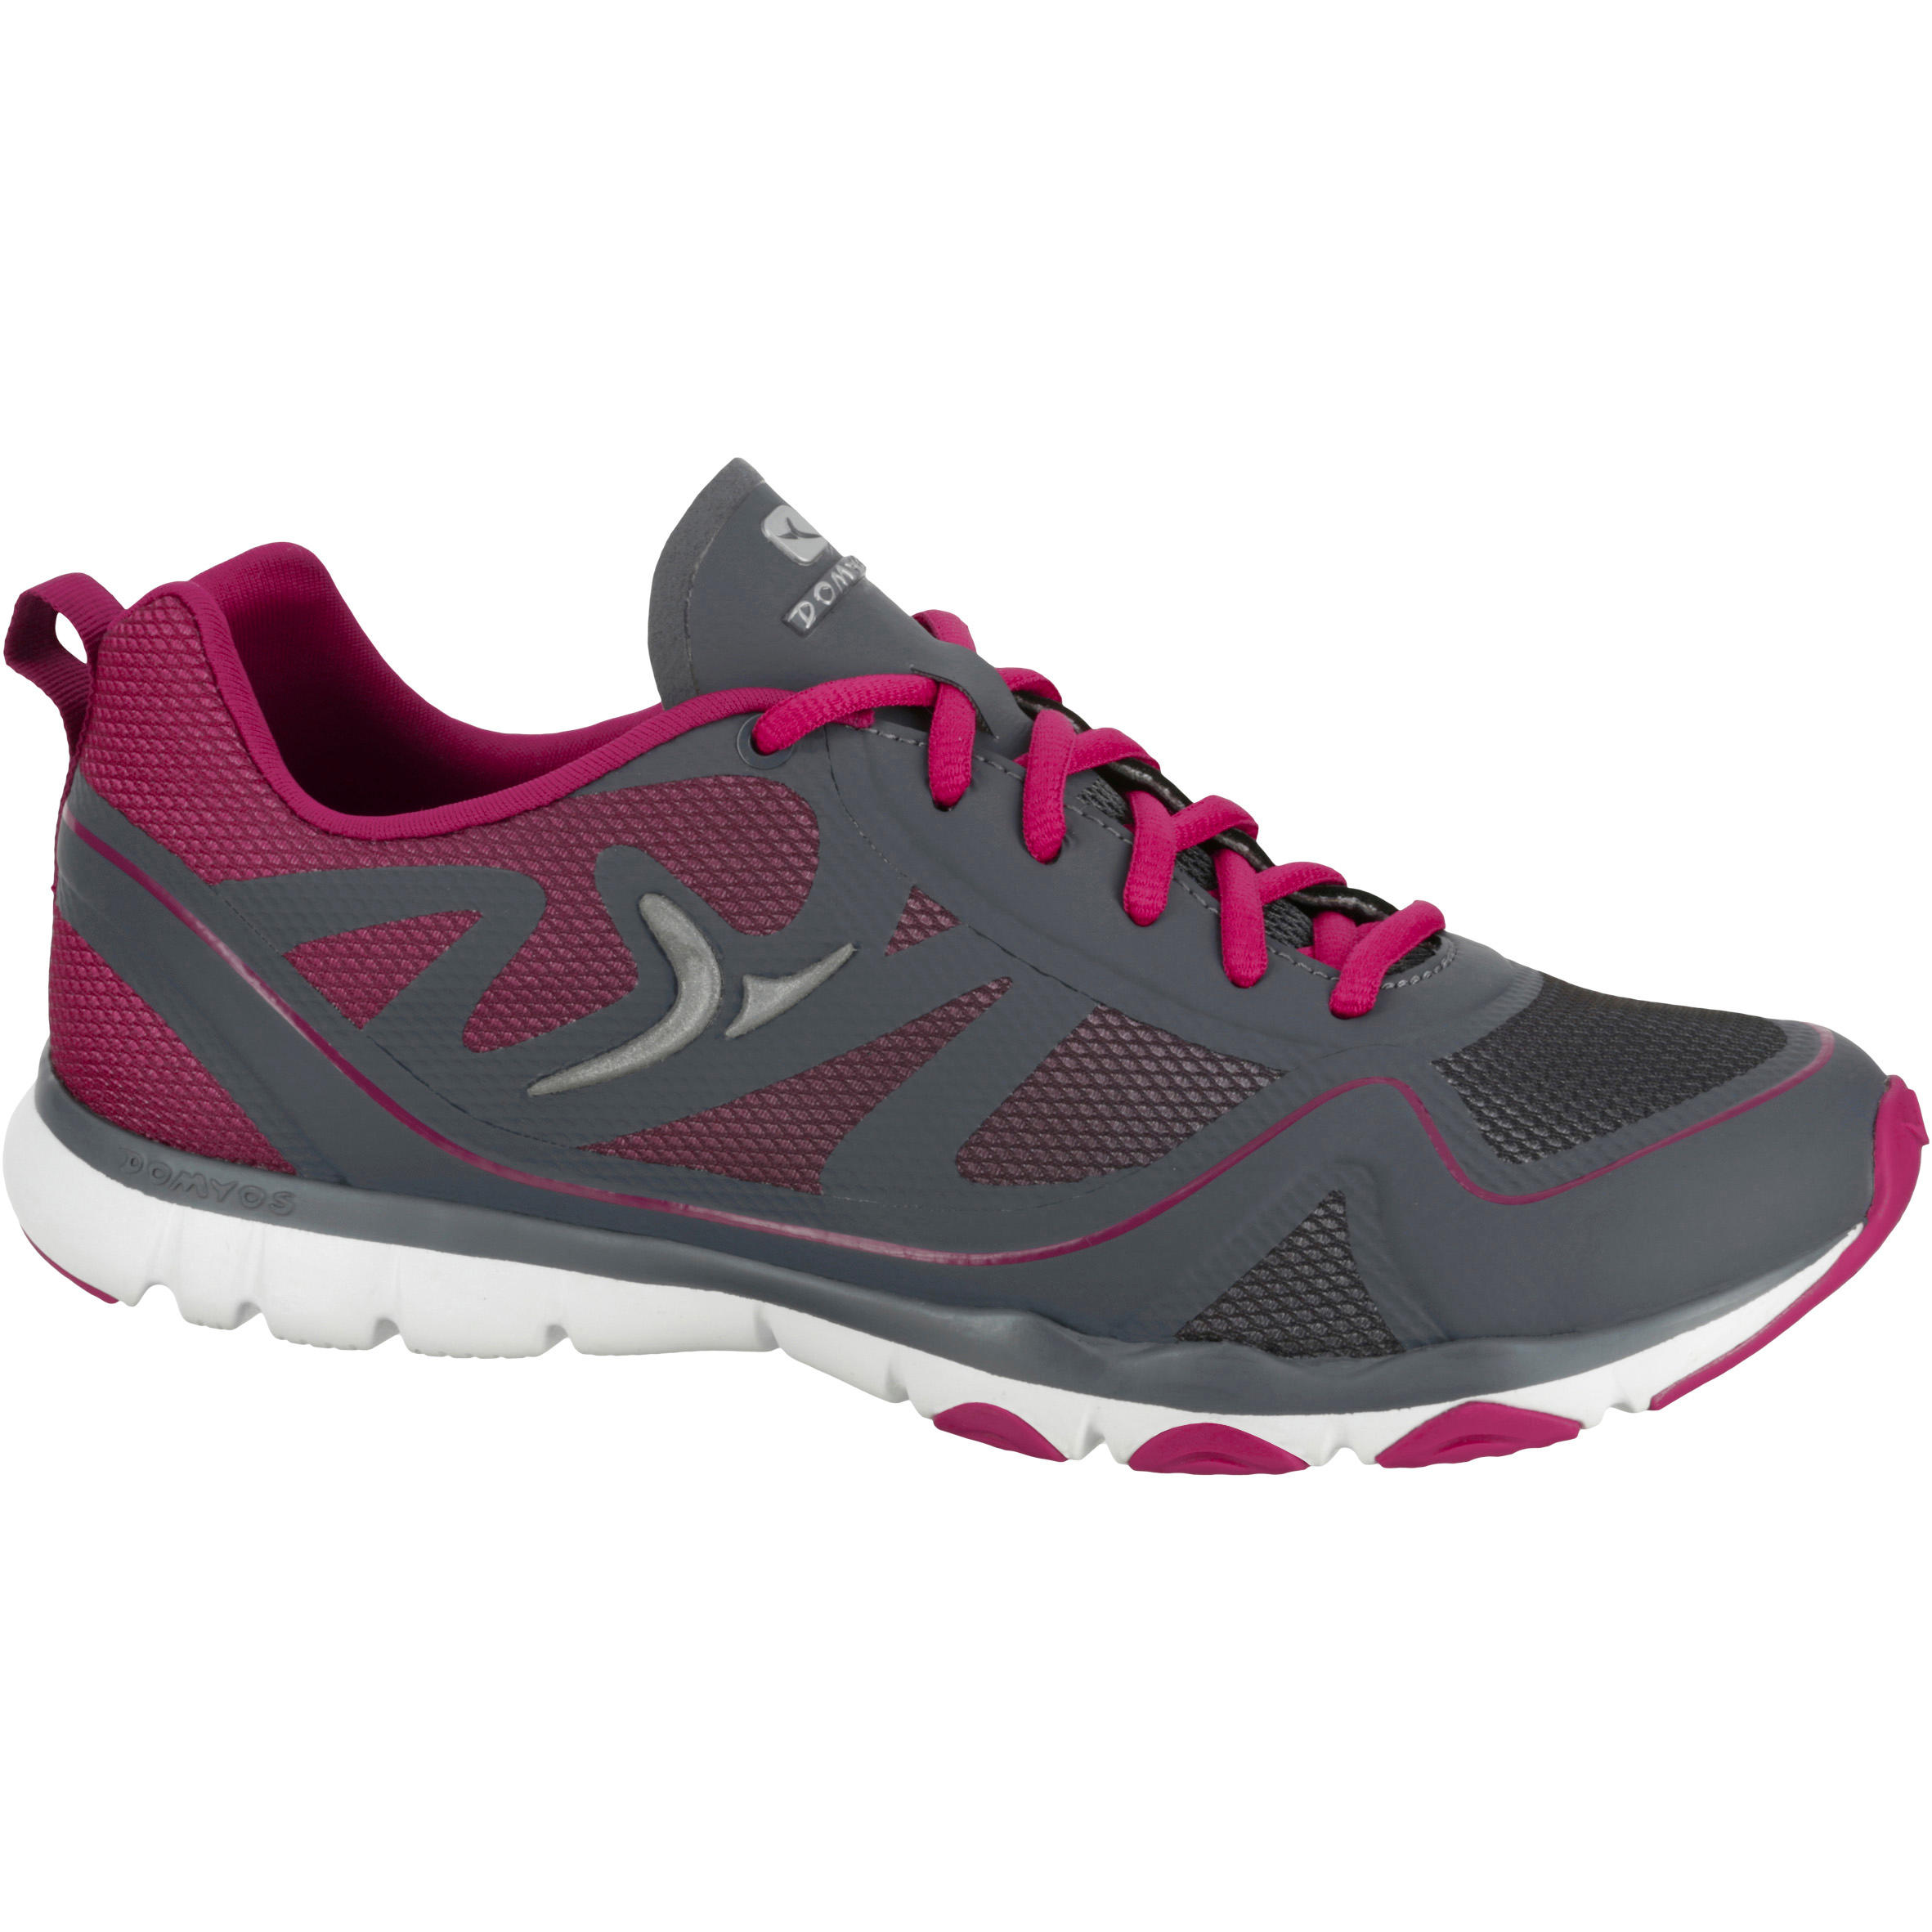 DOMYOS 360+ Women's Fitness Shoes - Grey/Purple